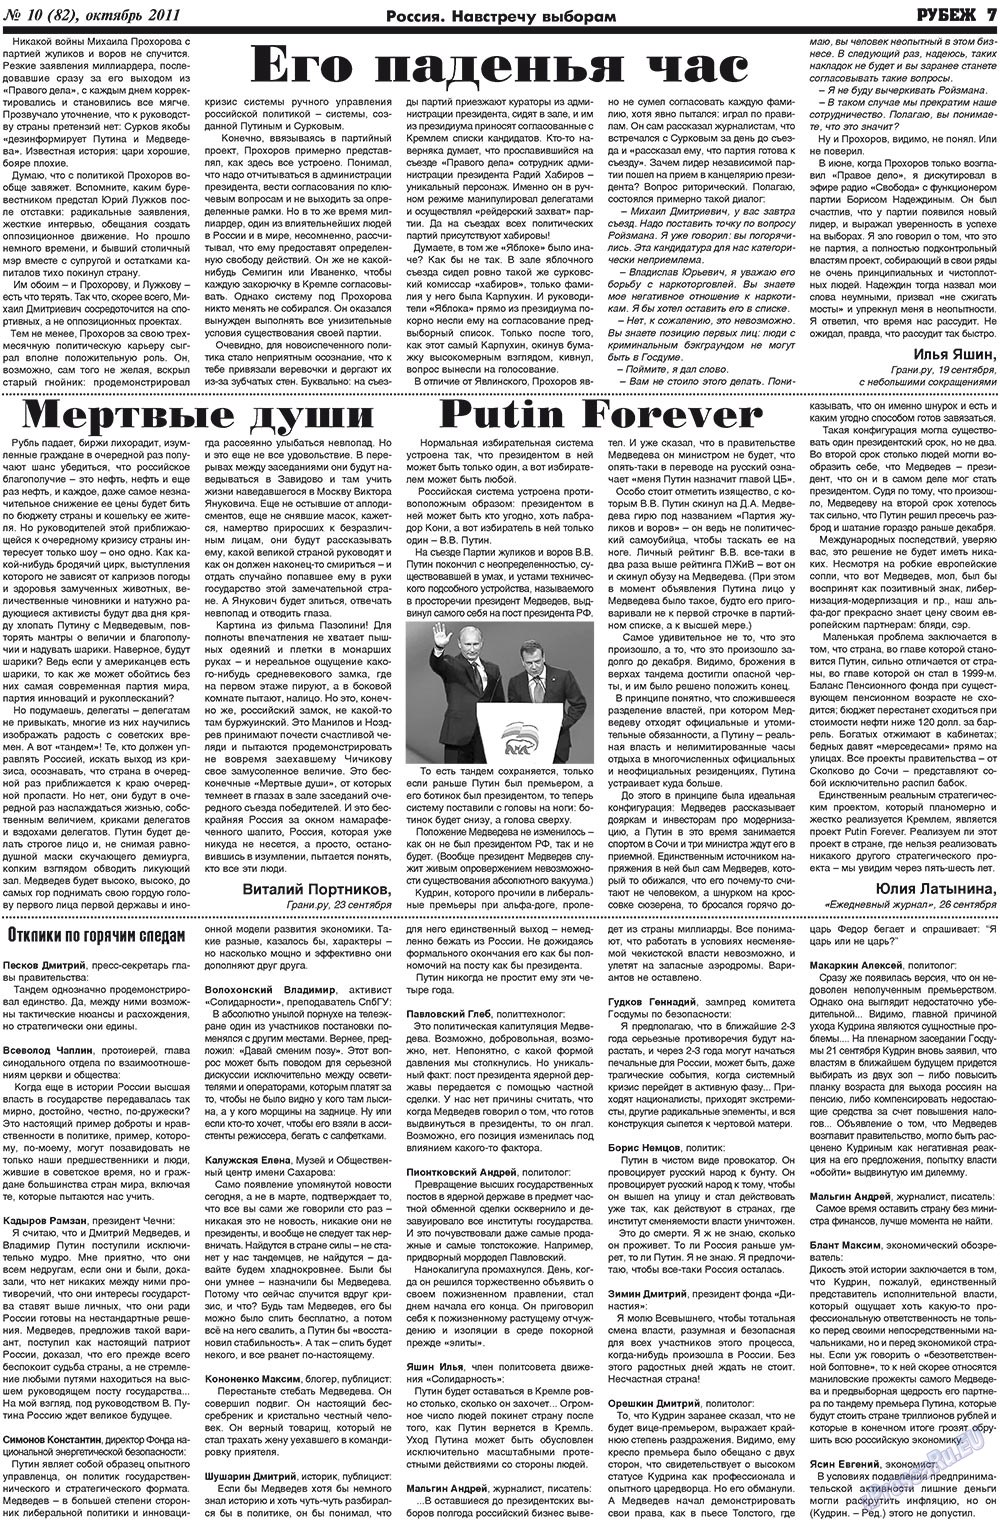 Рубеж, газета. 2011 №10 стр.7